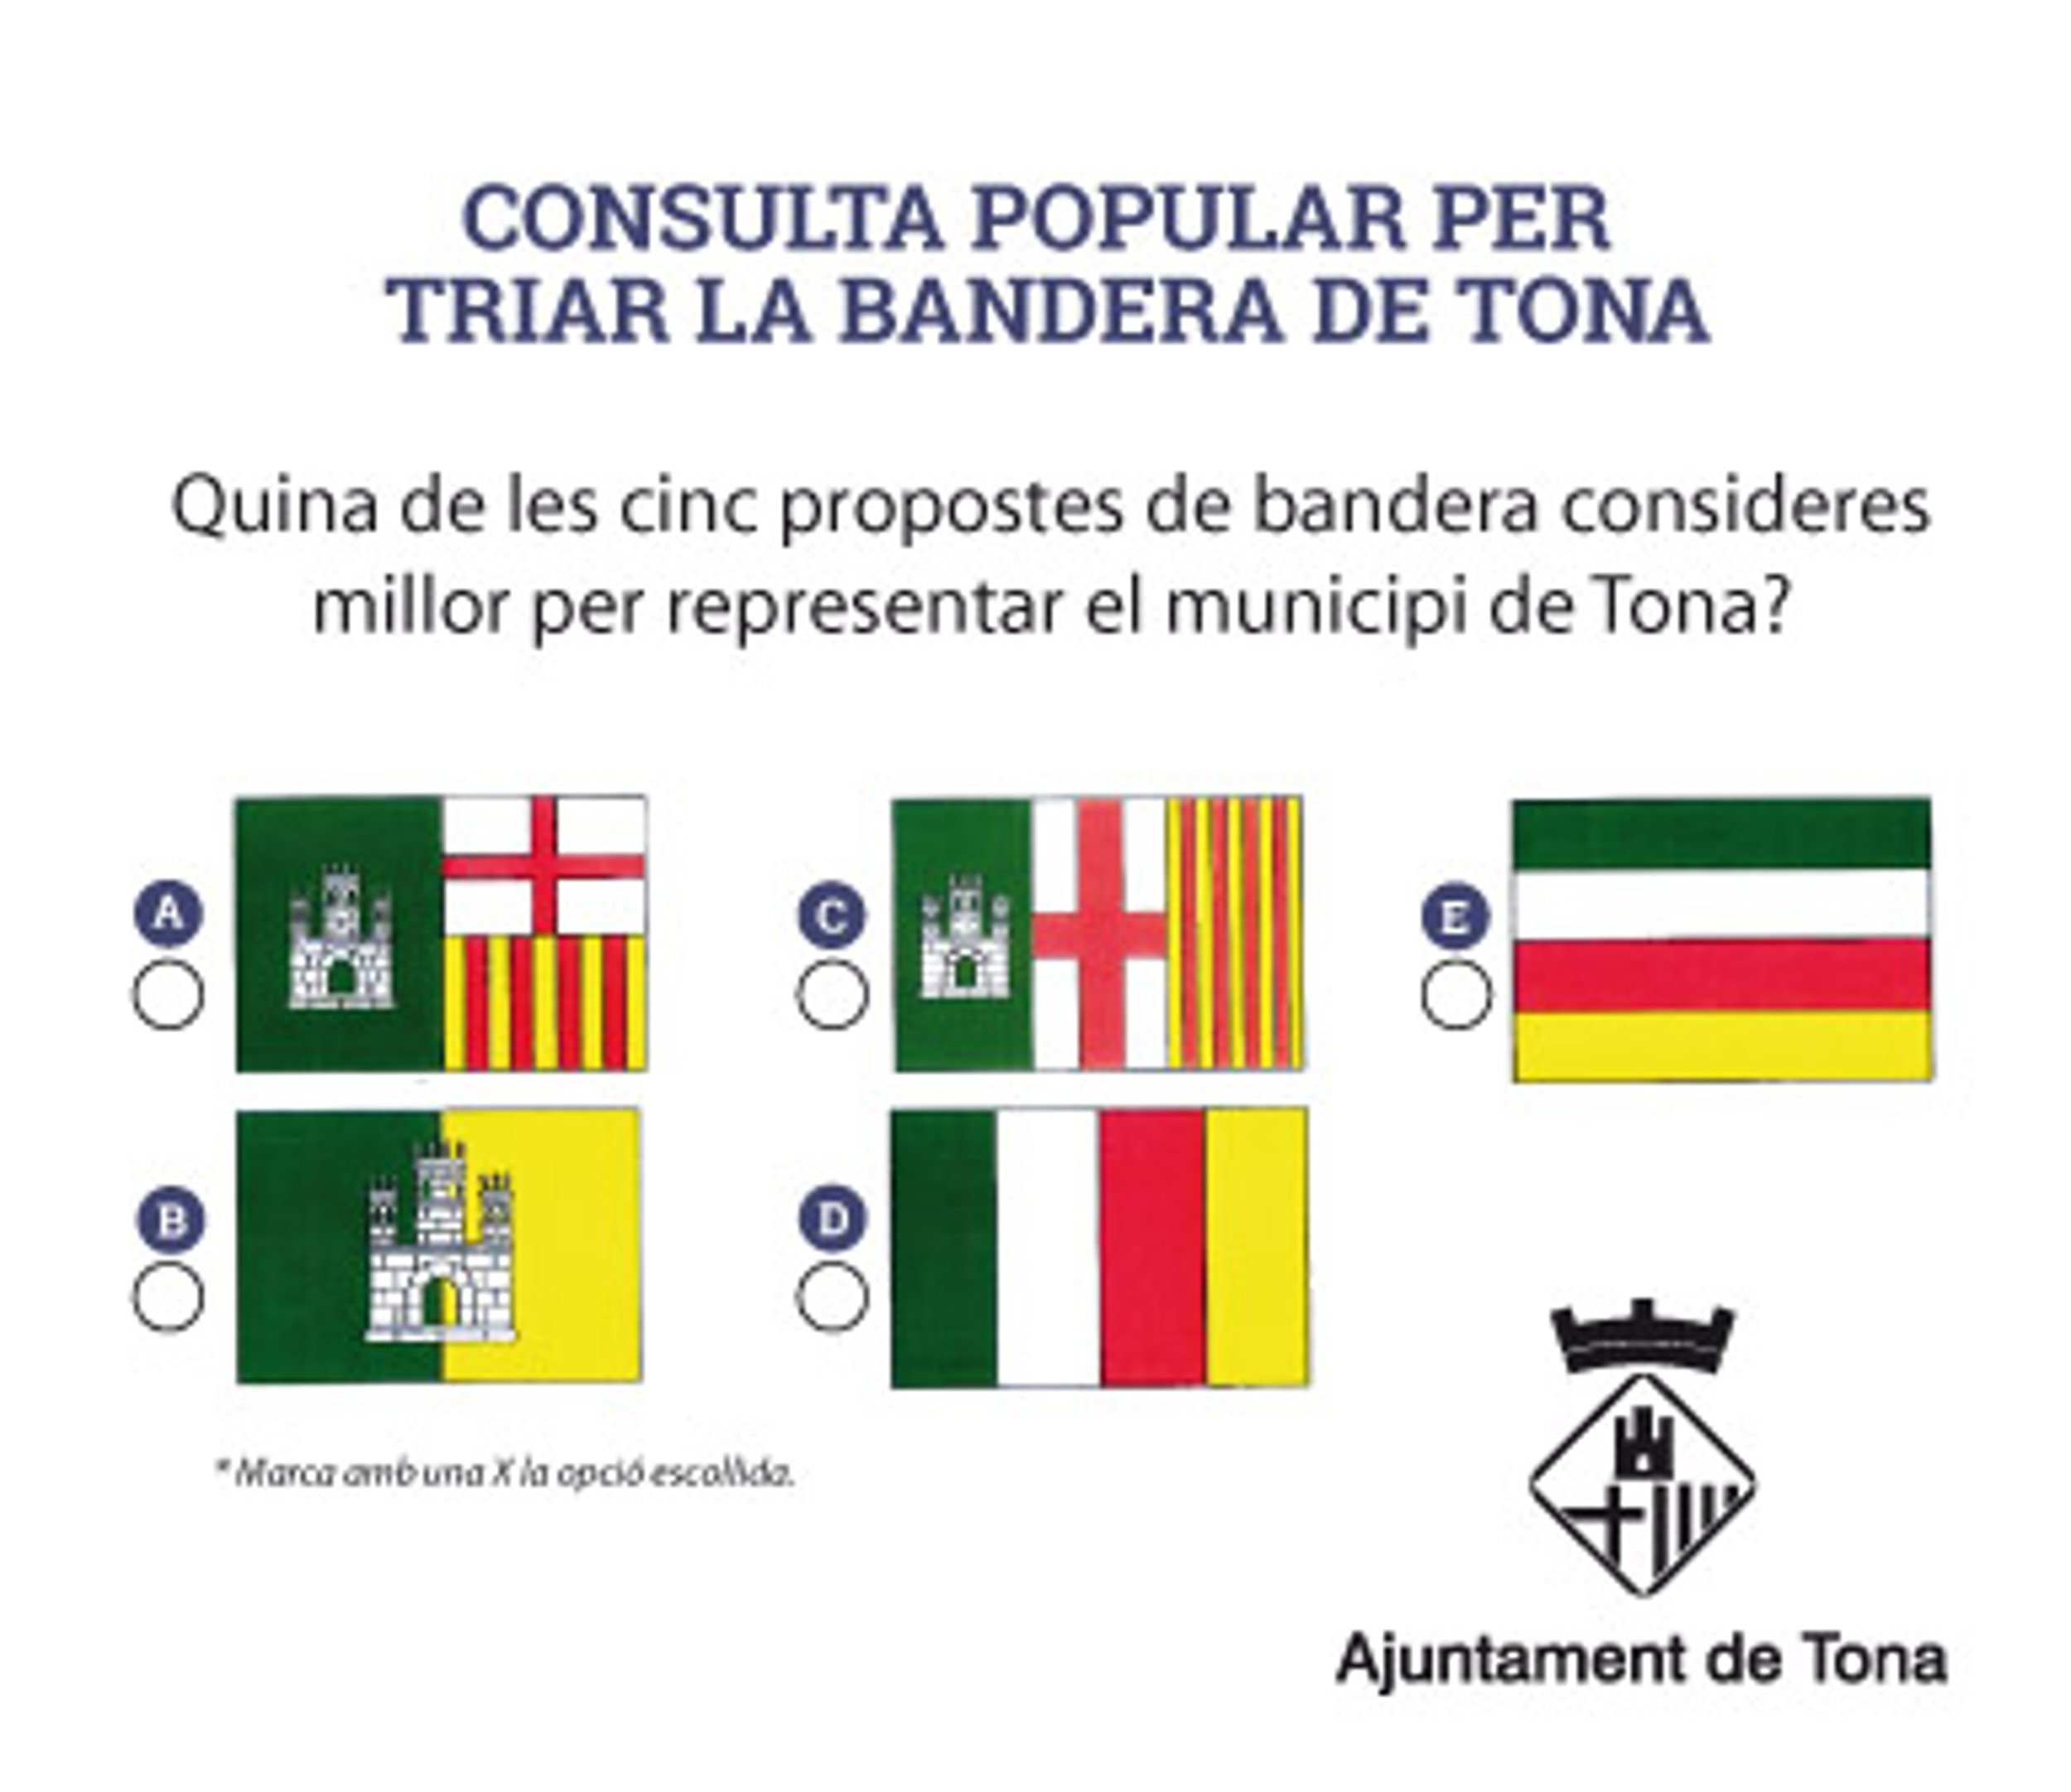 El Estado impugna la consulta popular para escoger la bandera de Tona